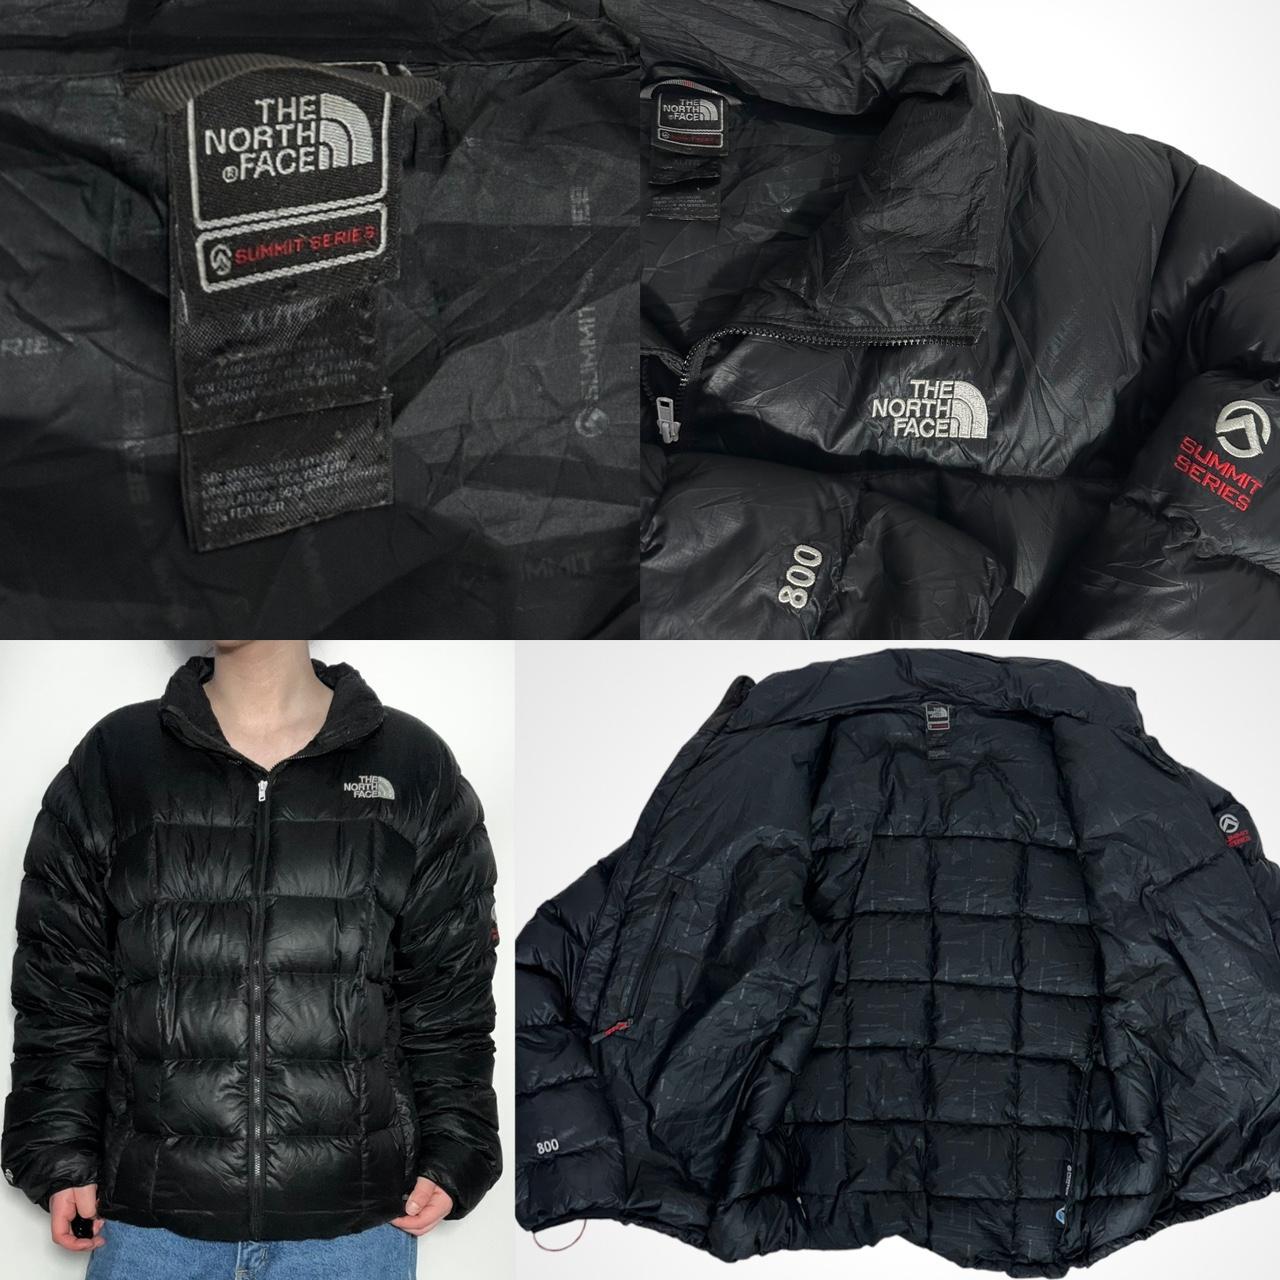 Vintage 90s The North Face 800 black Nuptse puffer jacket